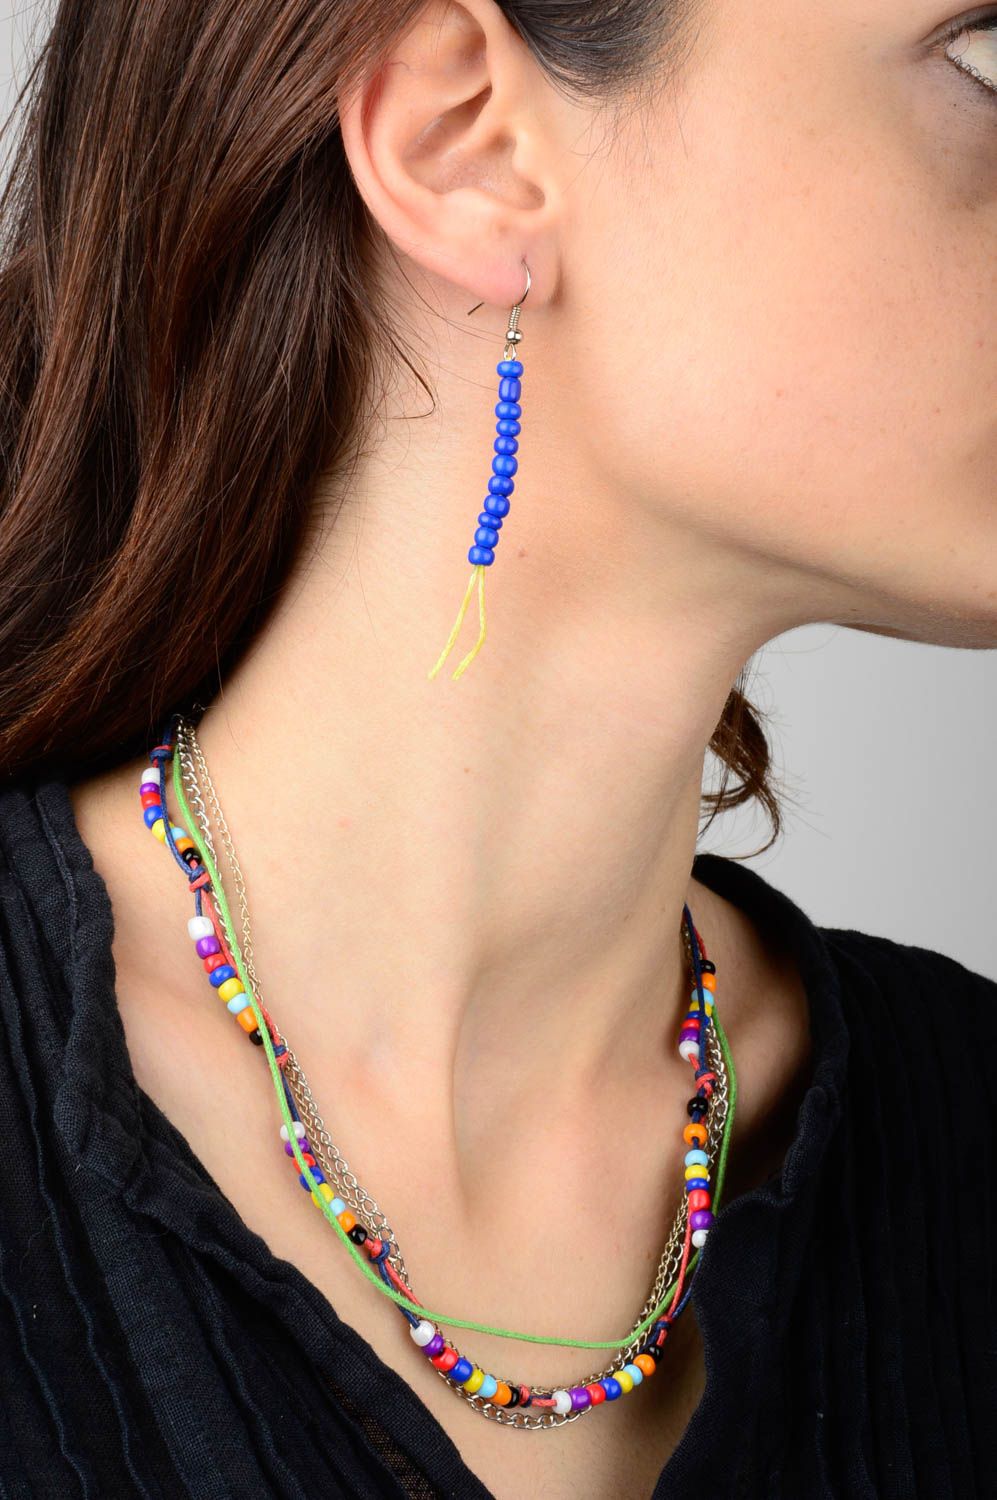 Handmade earrings designer necklace jewelry set unusual gift for women photo 2